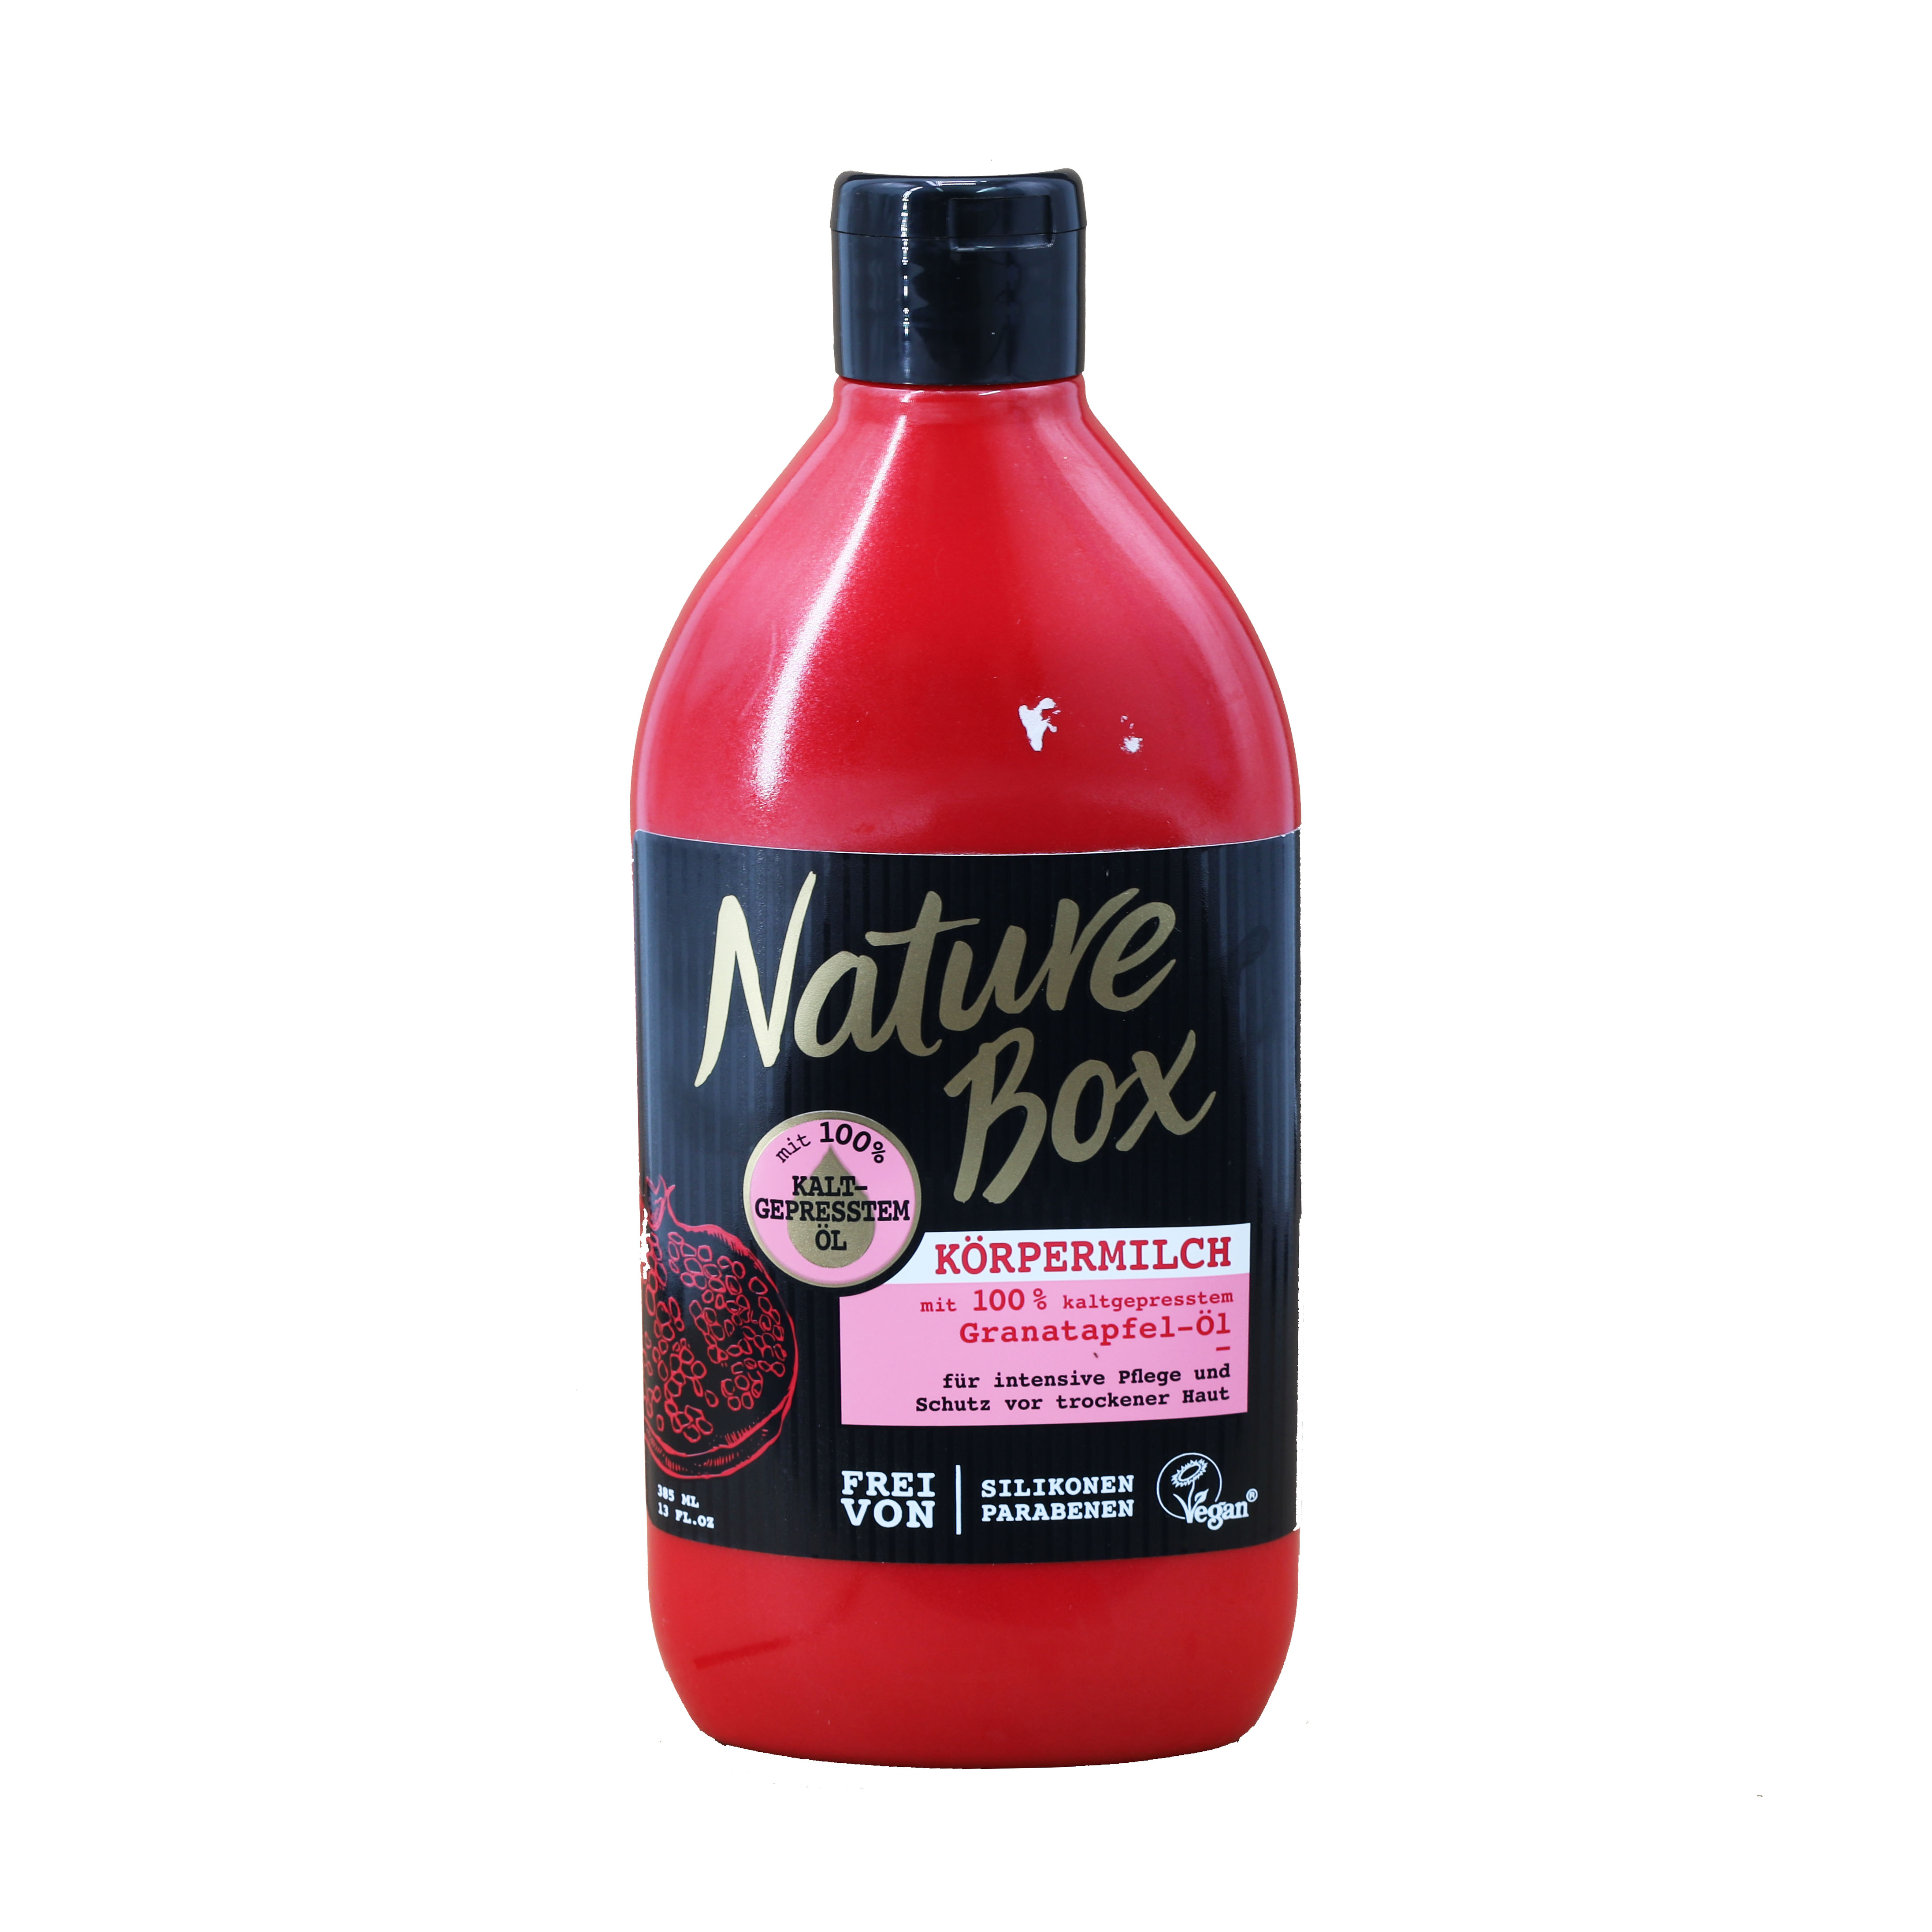 Nature Box Körpermilch mit kaltgepresstem Granatapfelöl 385ml